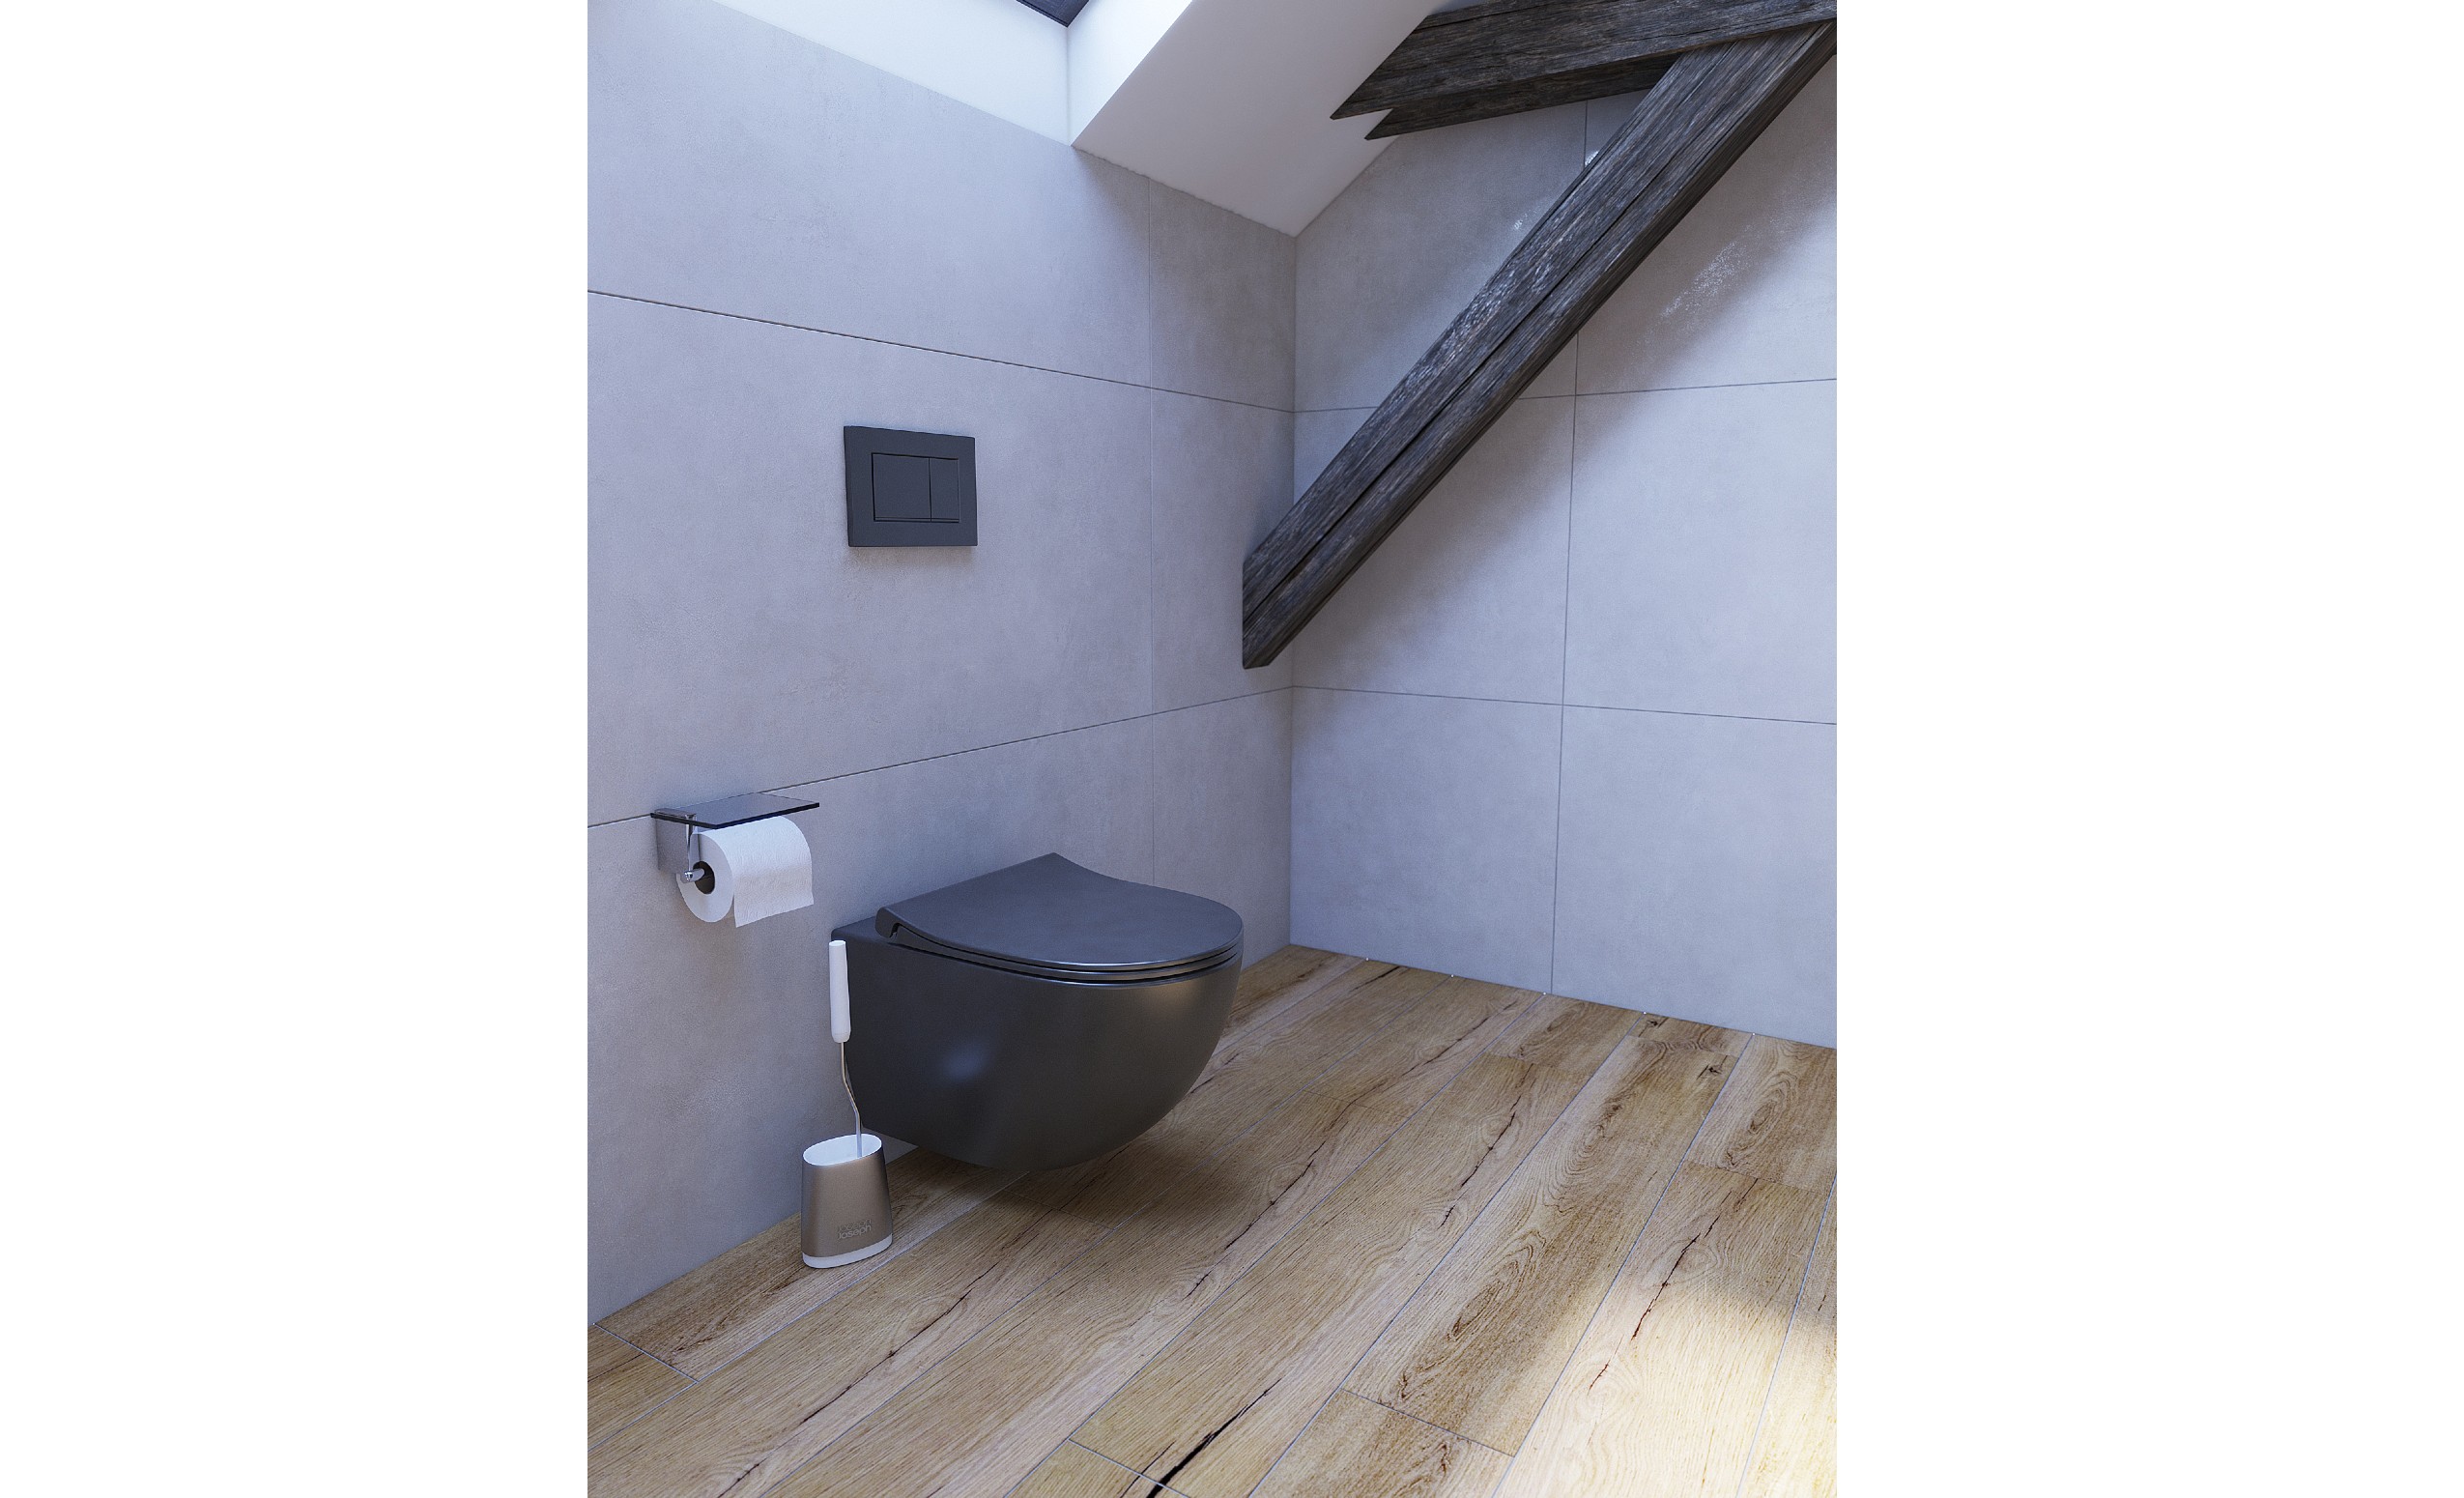 Podkrovni-koupelna-cerne-wc-a-umyvadlo-svetle-sede-obklady-drevena-podlaha-006.jpg